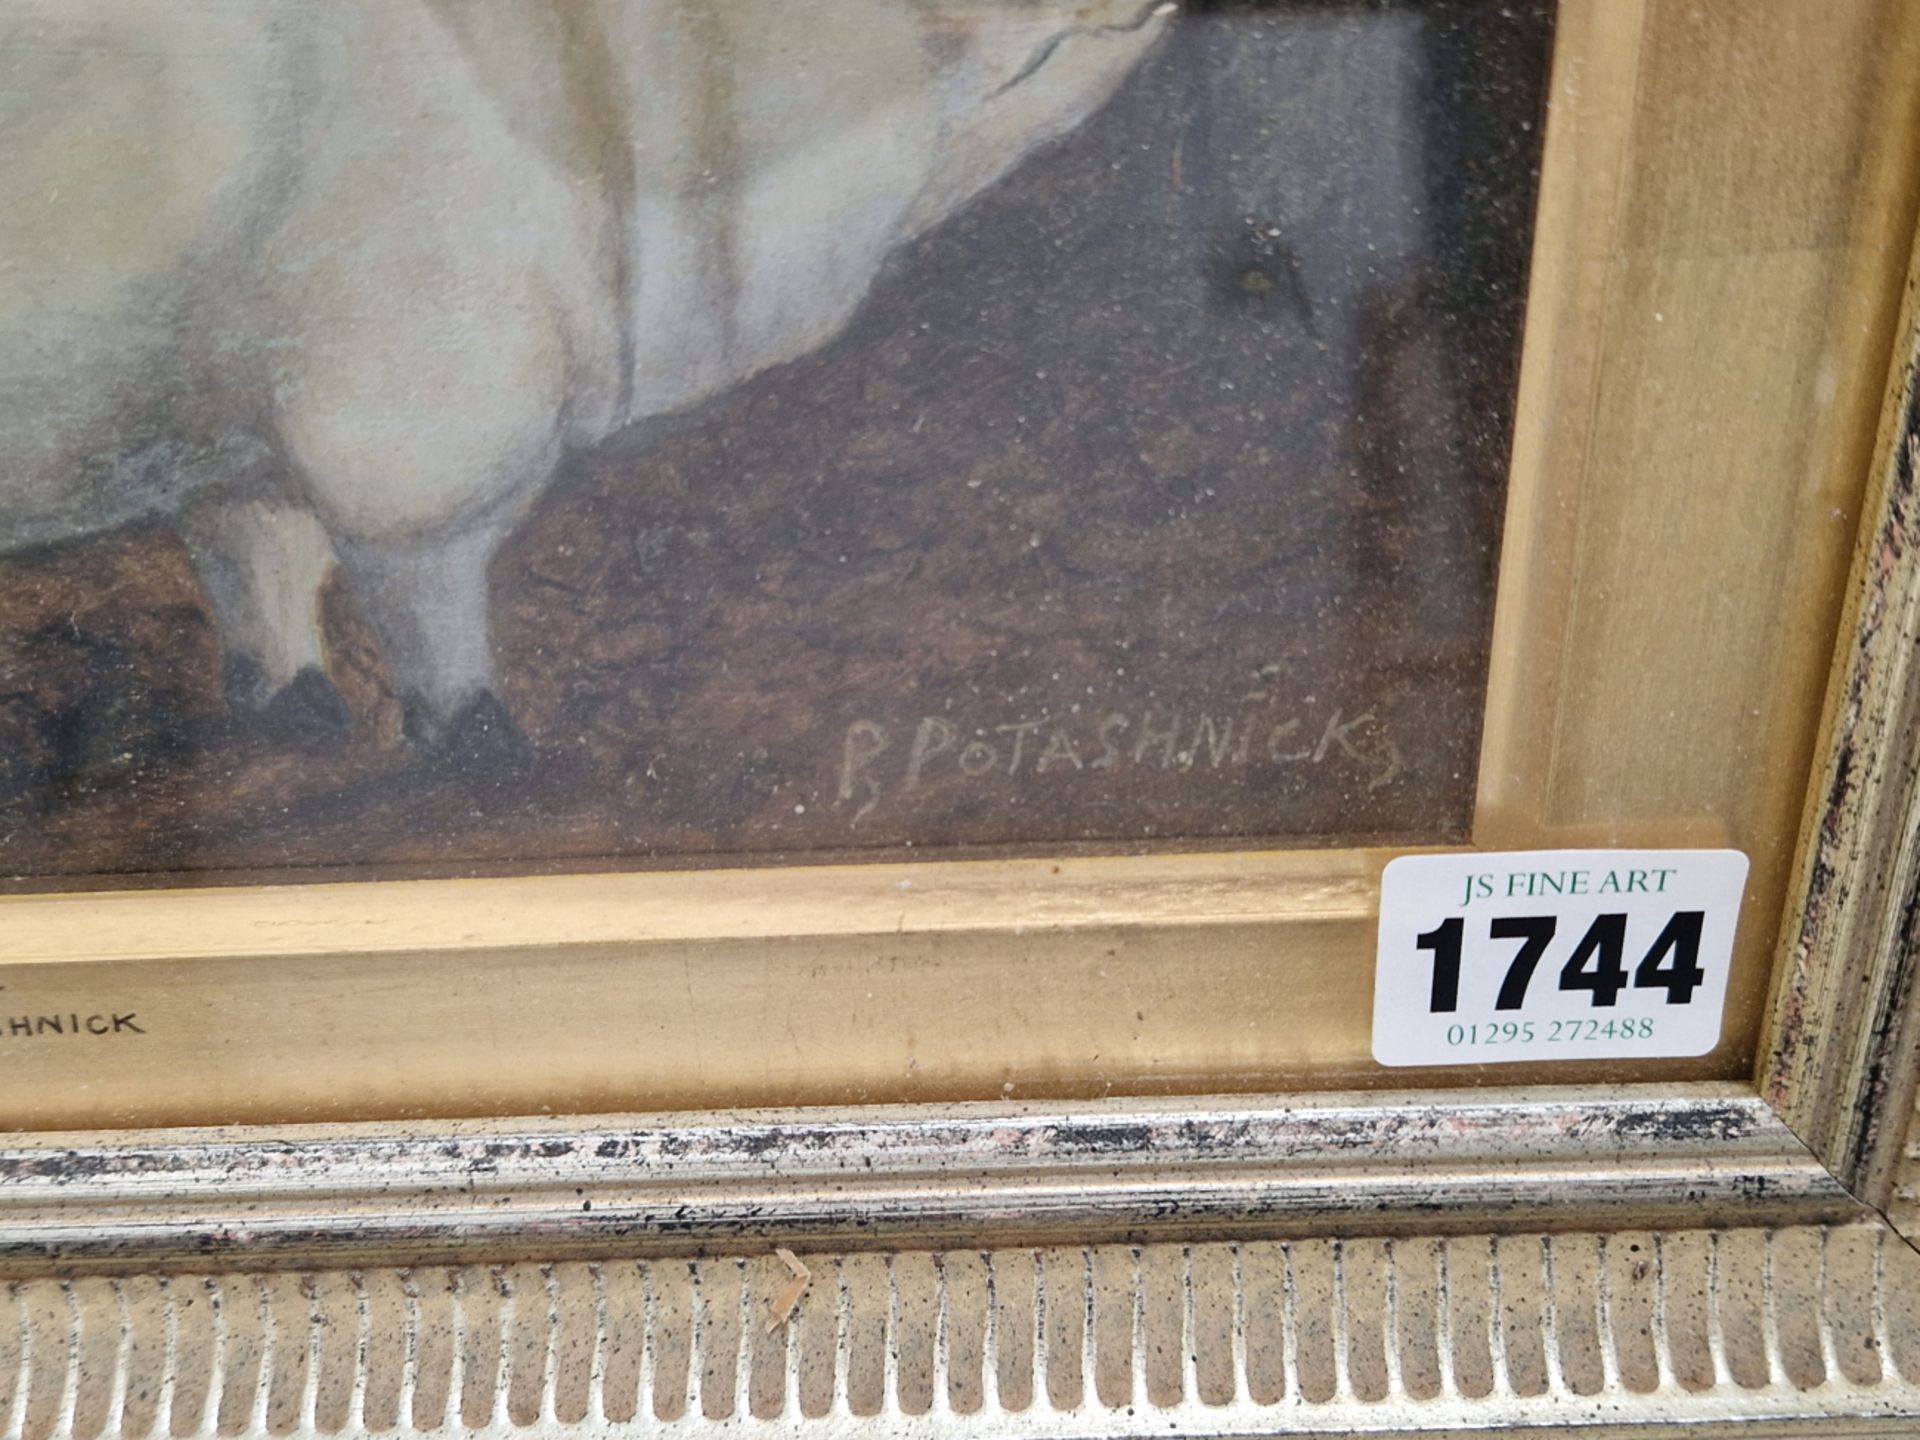 P. POTASHNICK A BIG PIG, SIGNED, OIL ON BOARD. 21 x 26cms - Image 4 of 6